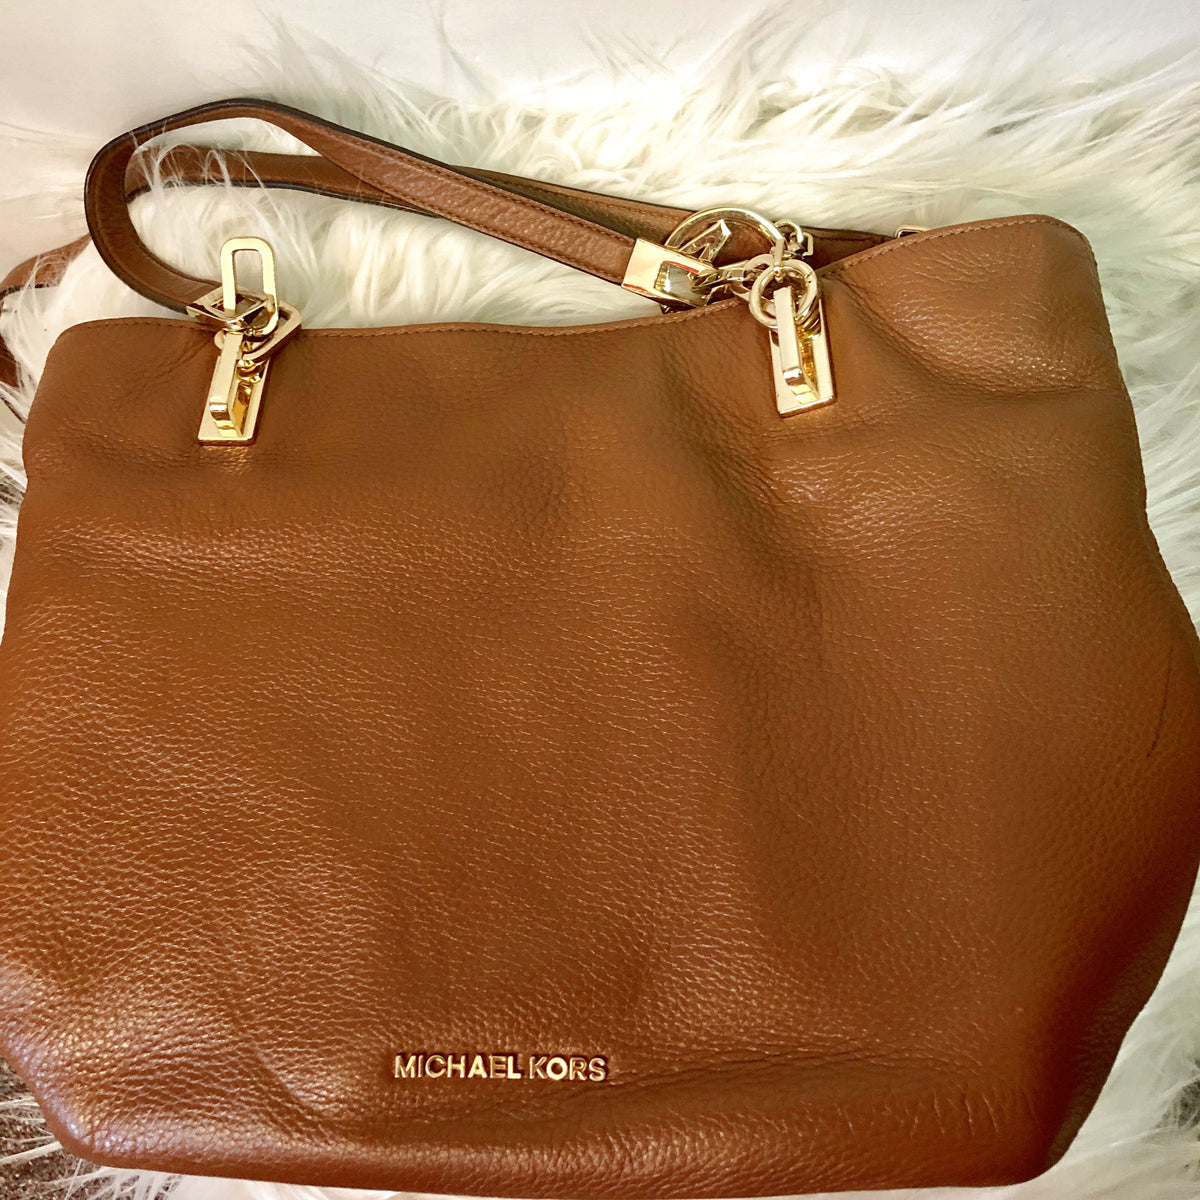 michael kors tan leather purse